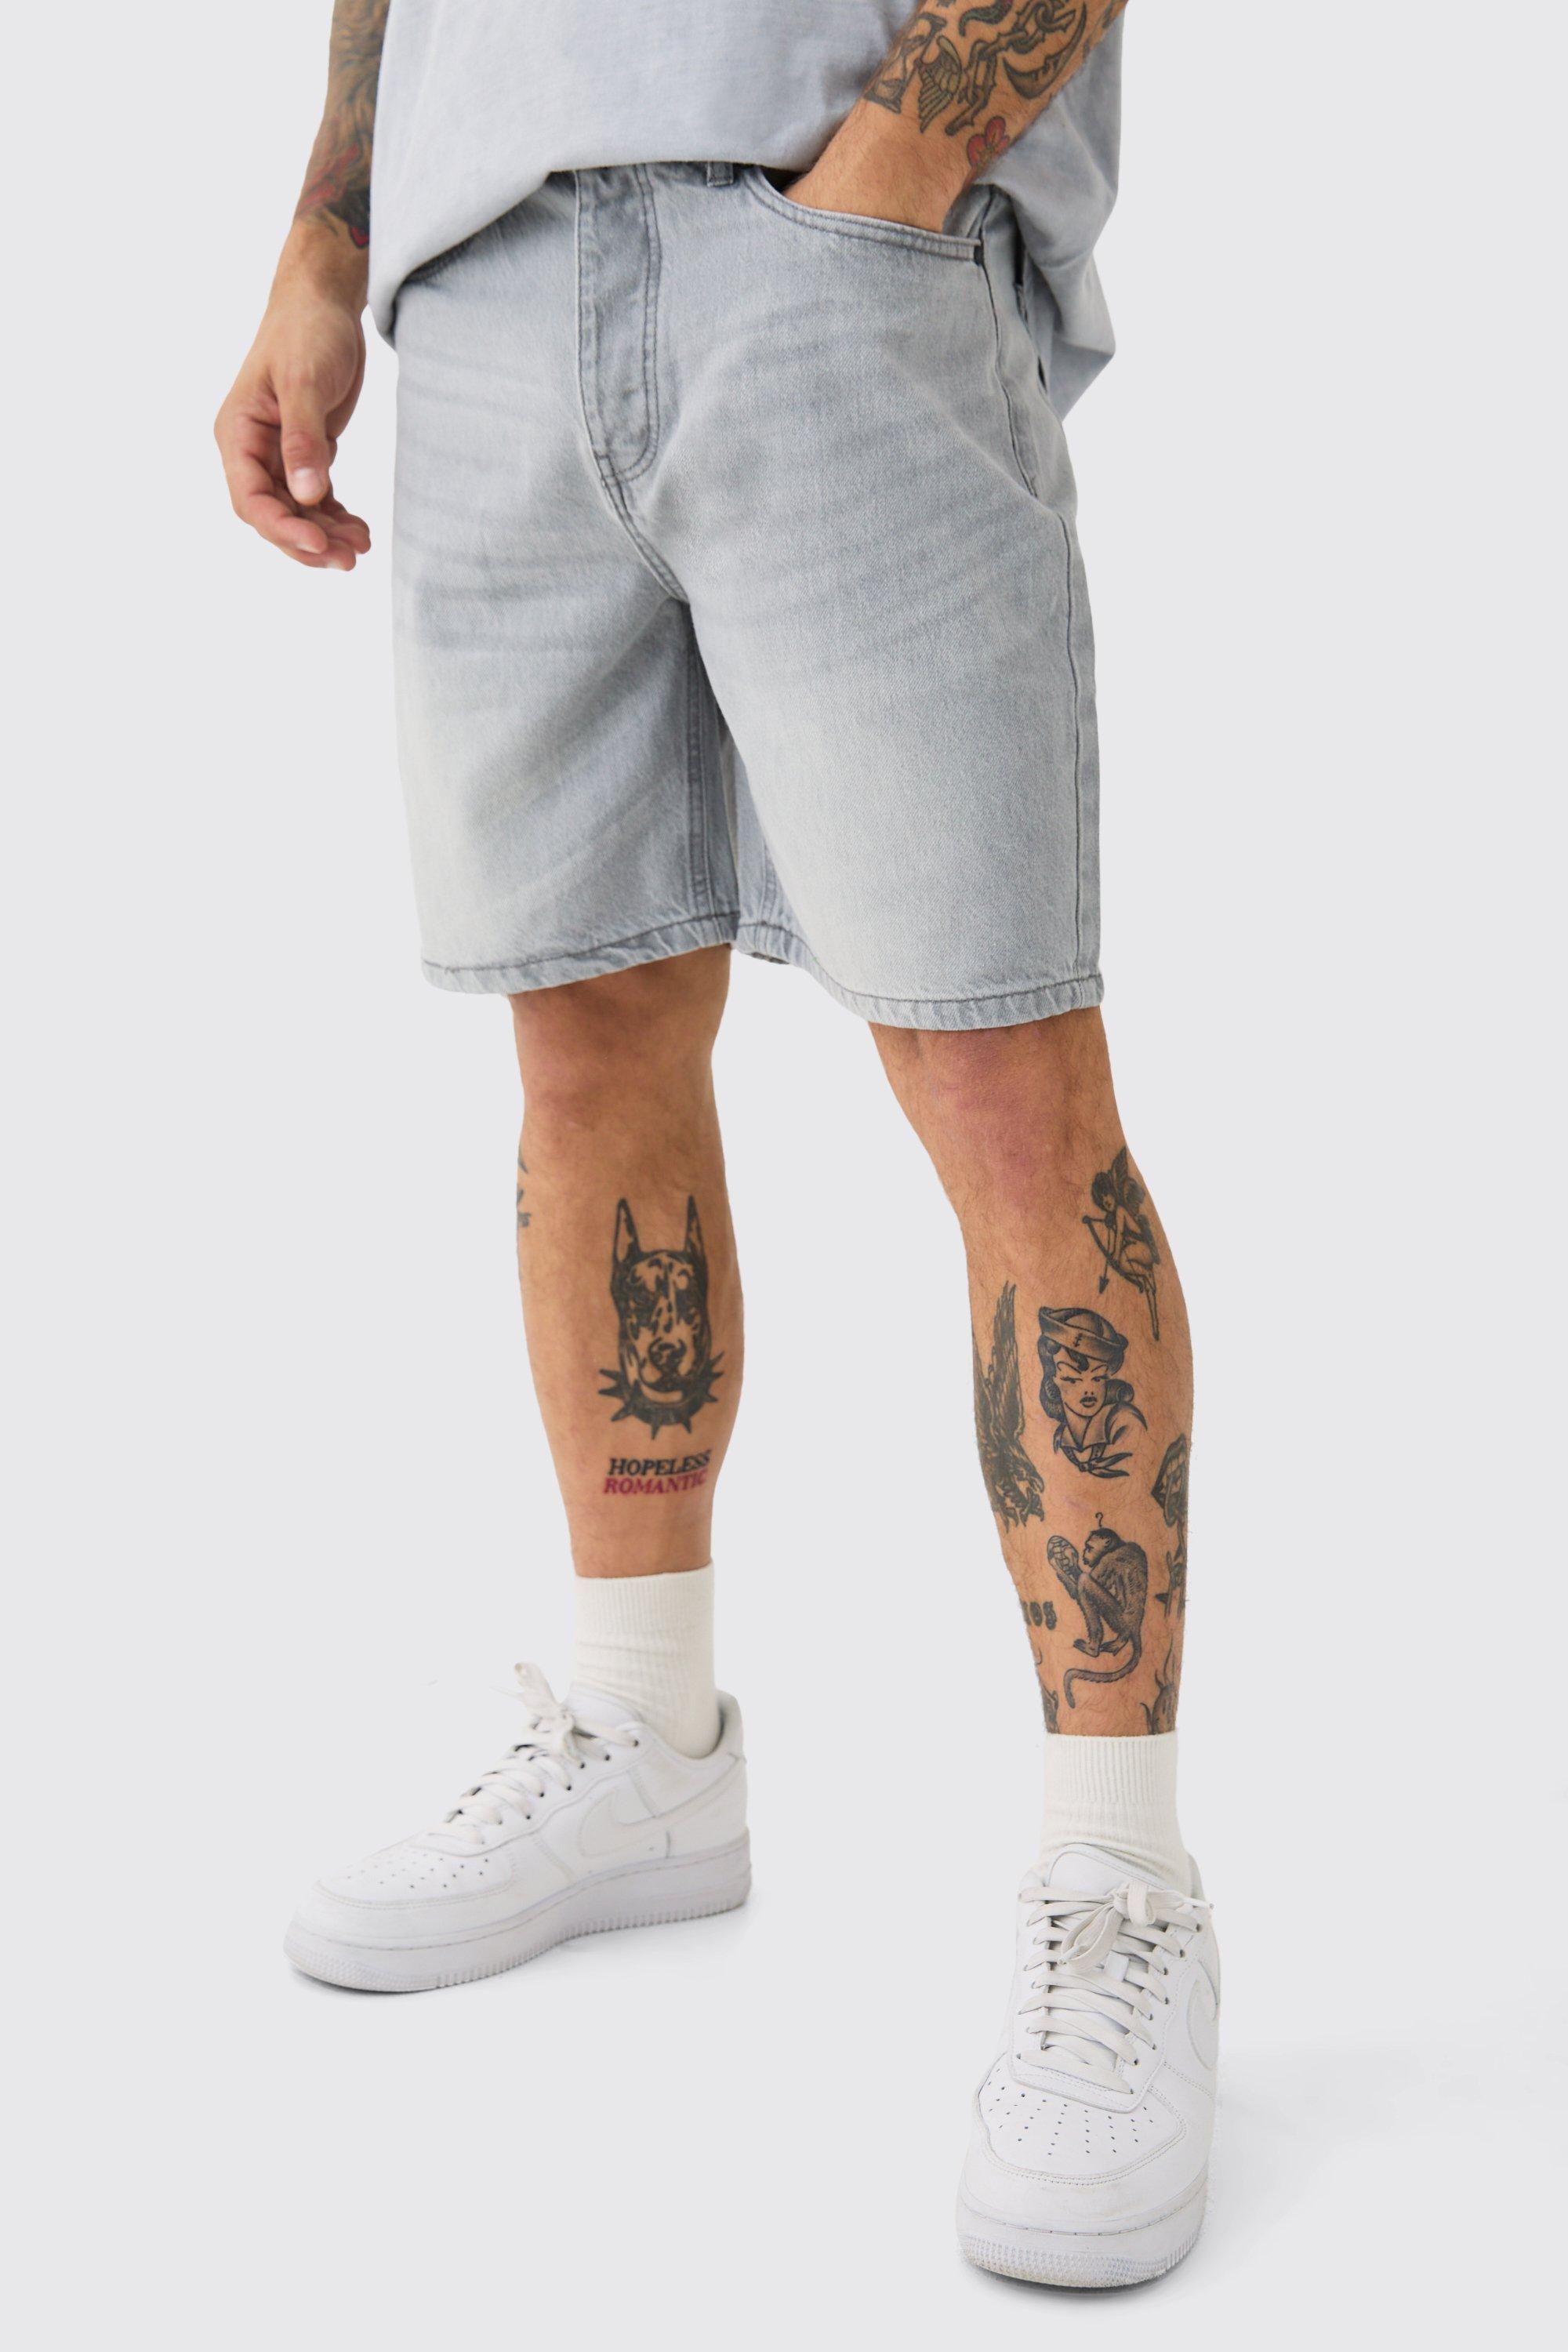 Image of Relaxed Rigid Denim Shorts In Light Grey, Grigio